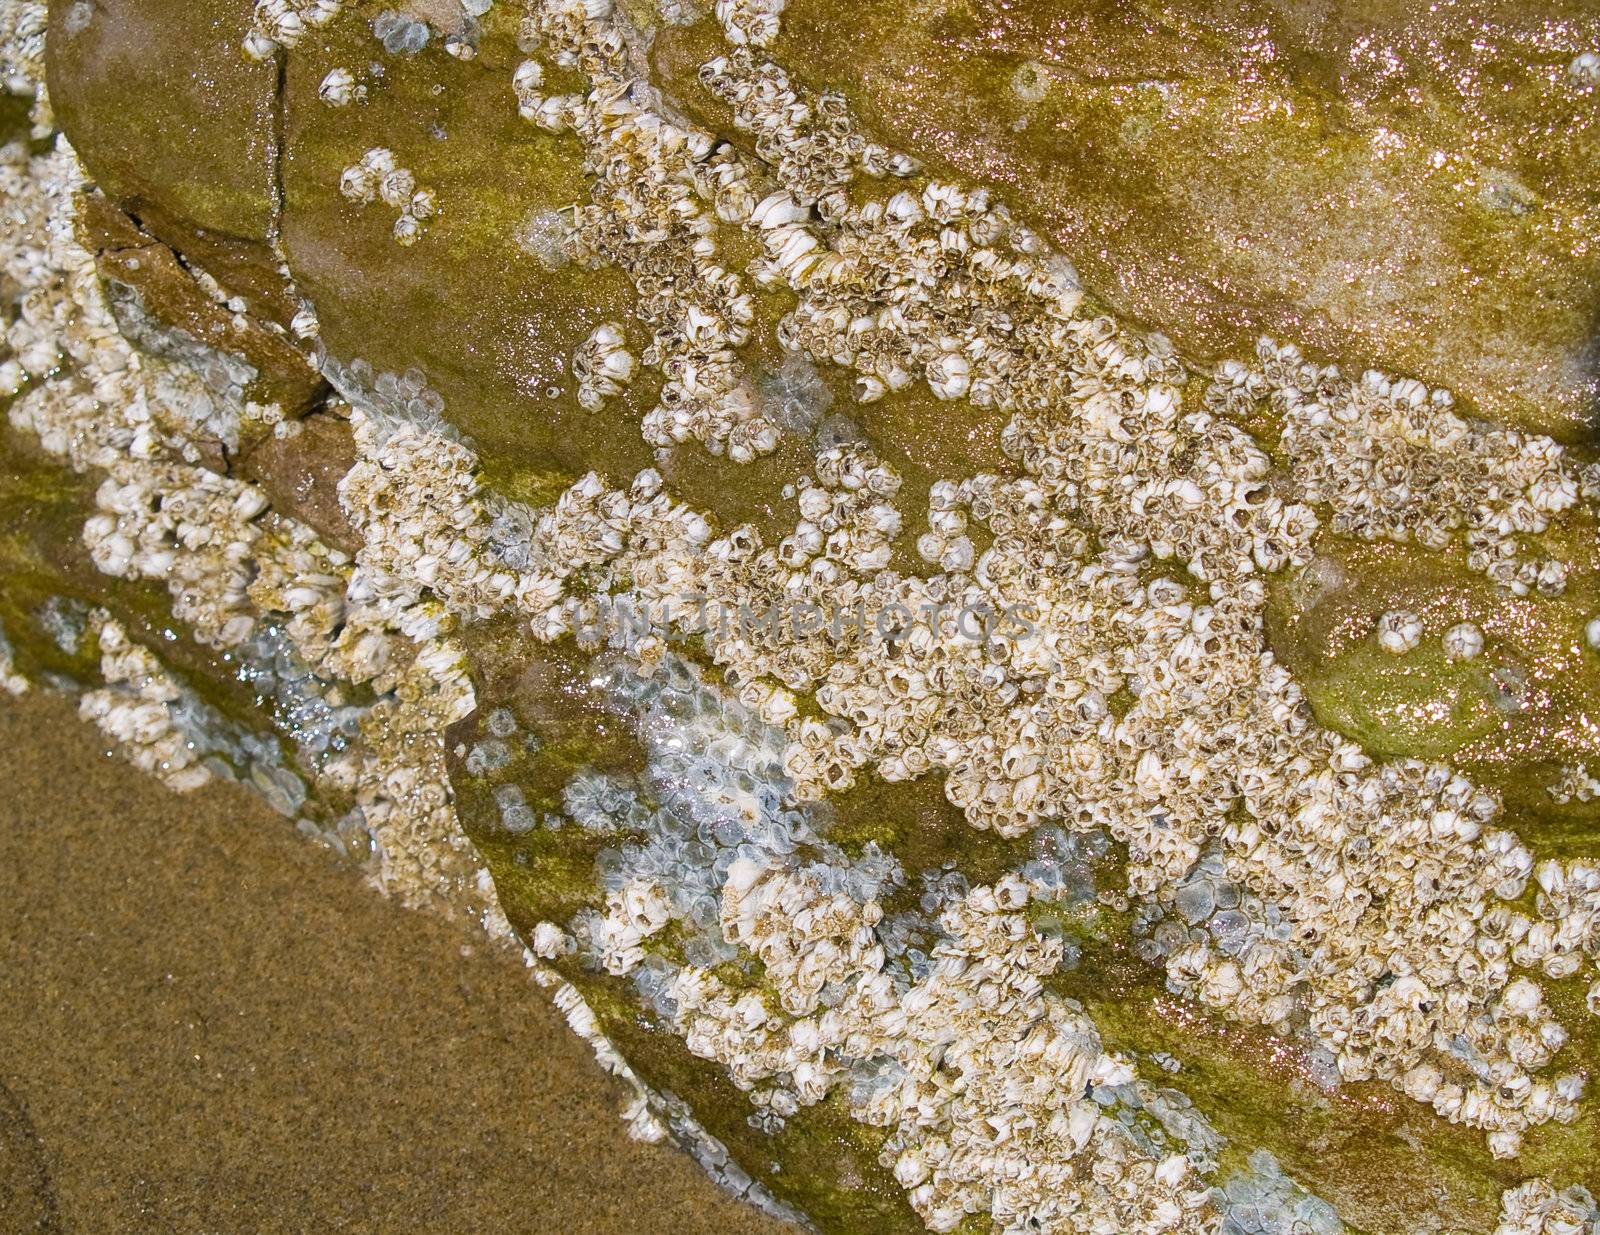 Barnacles on Rock on a Sandy Beach by Frankljunior